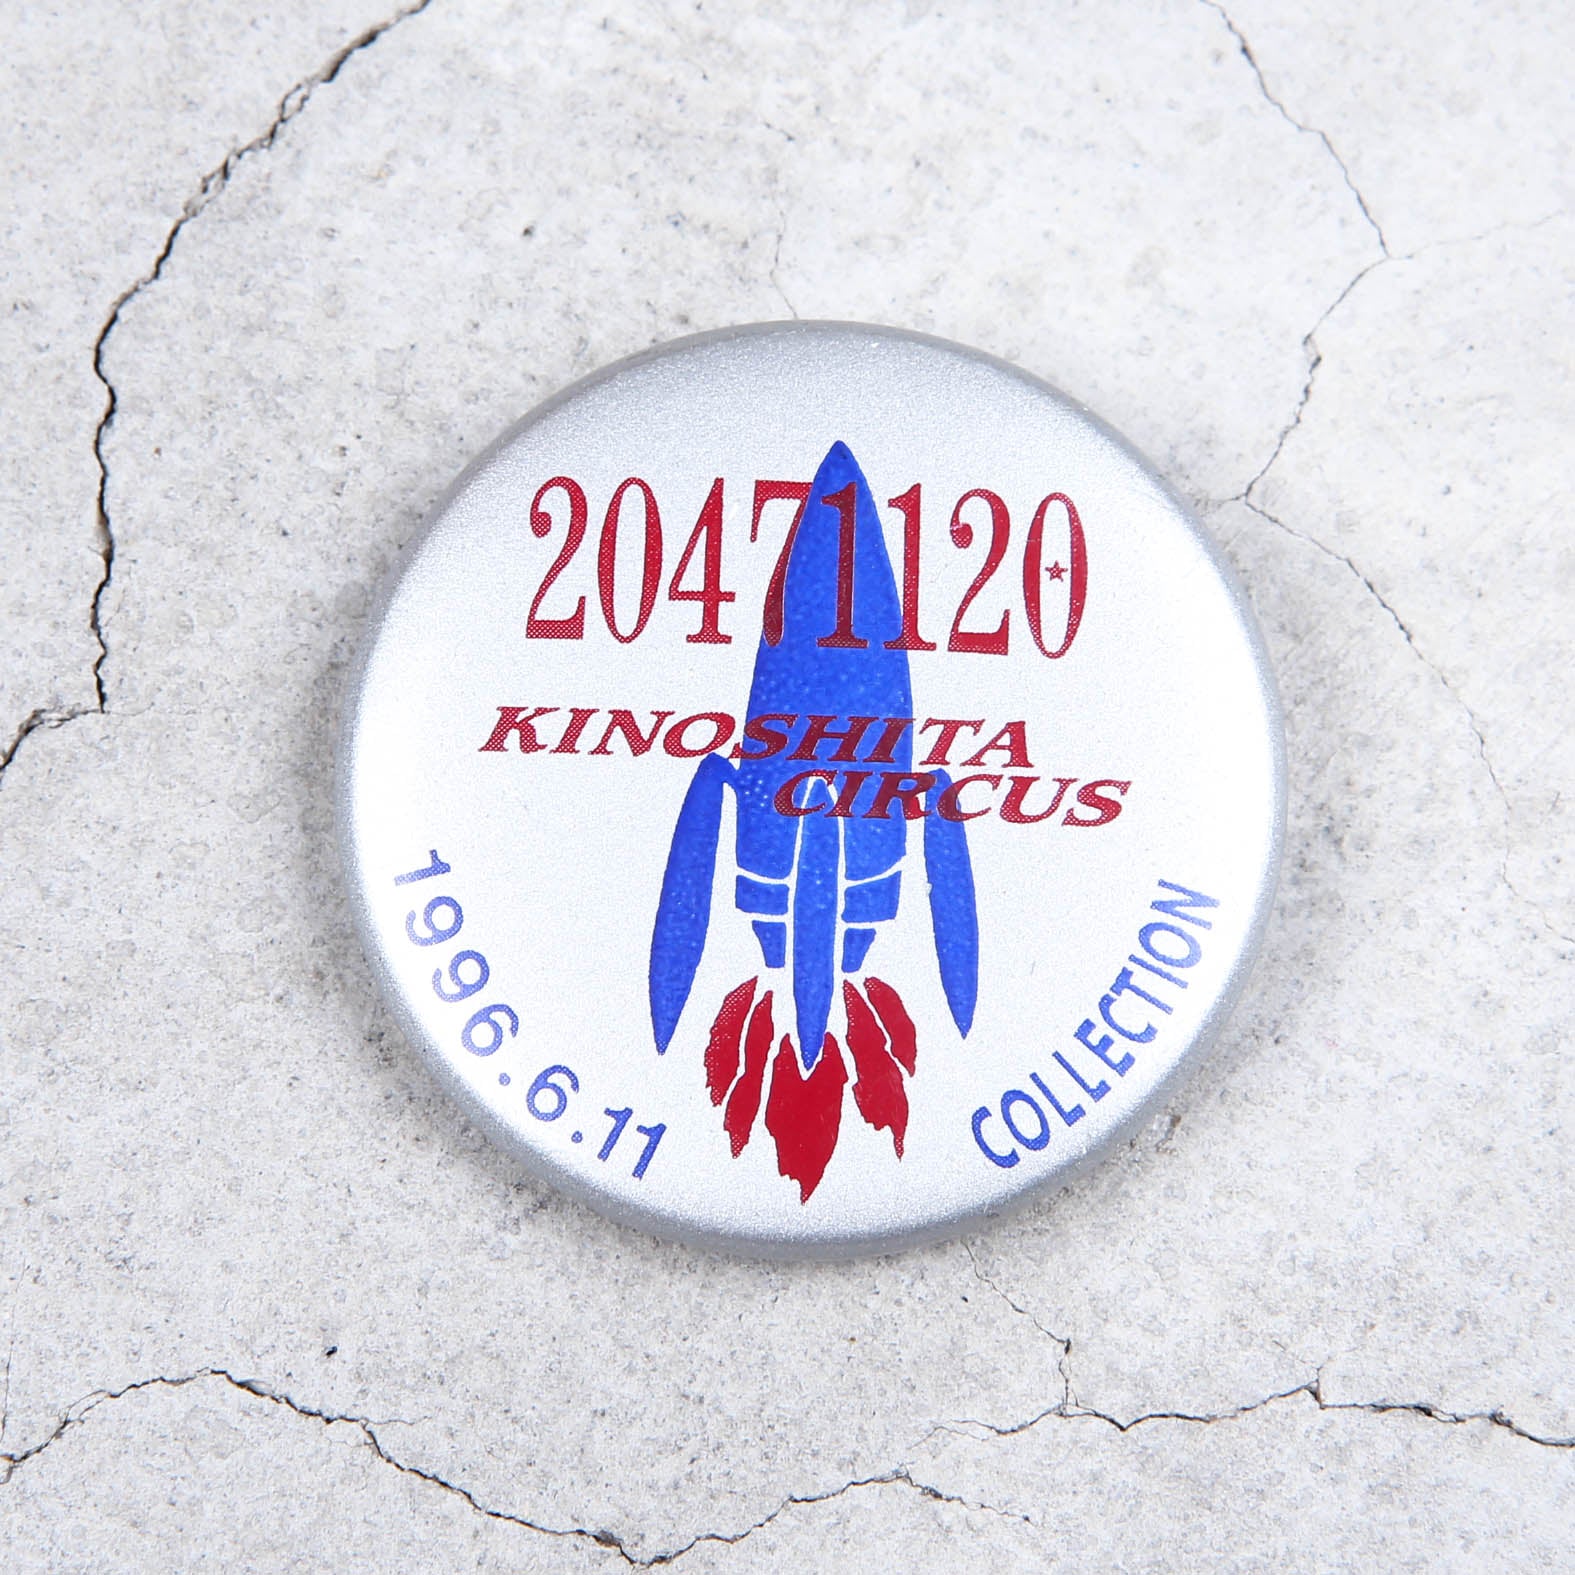 20471120 Kinoshita Circus Pin Badge SS/96